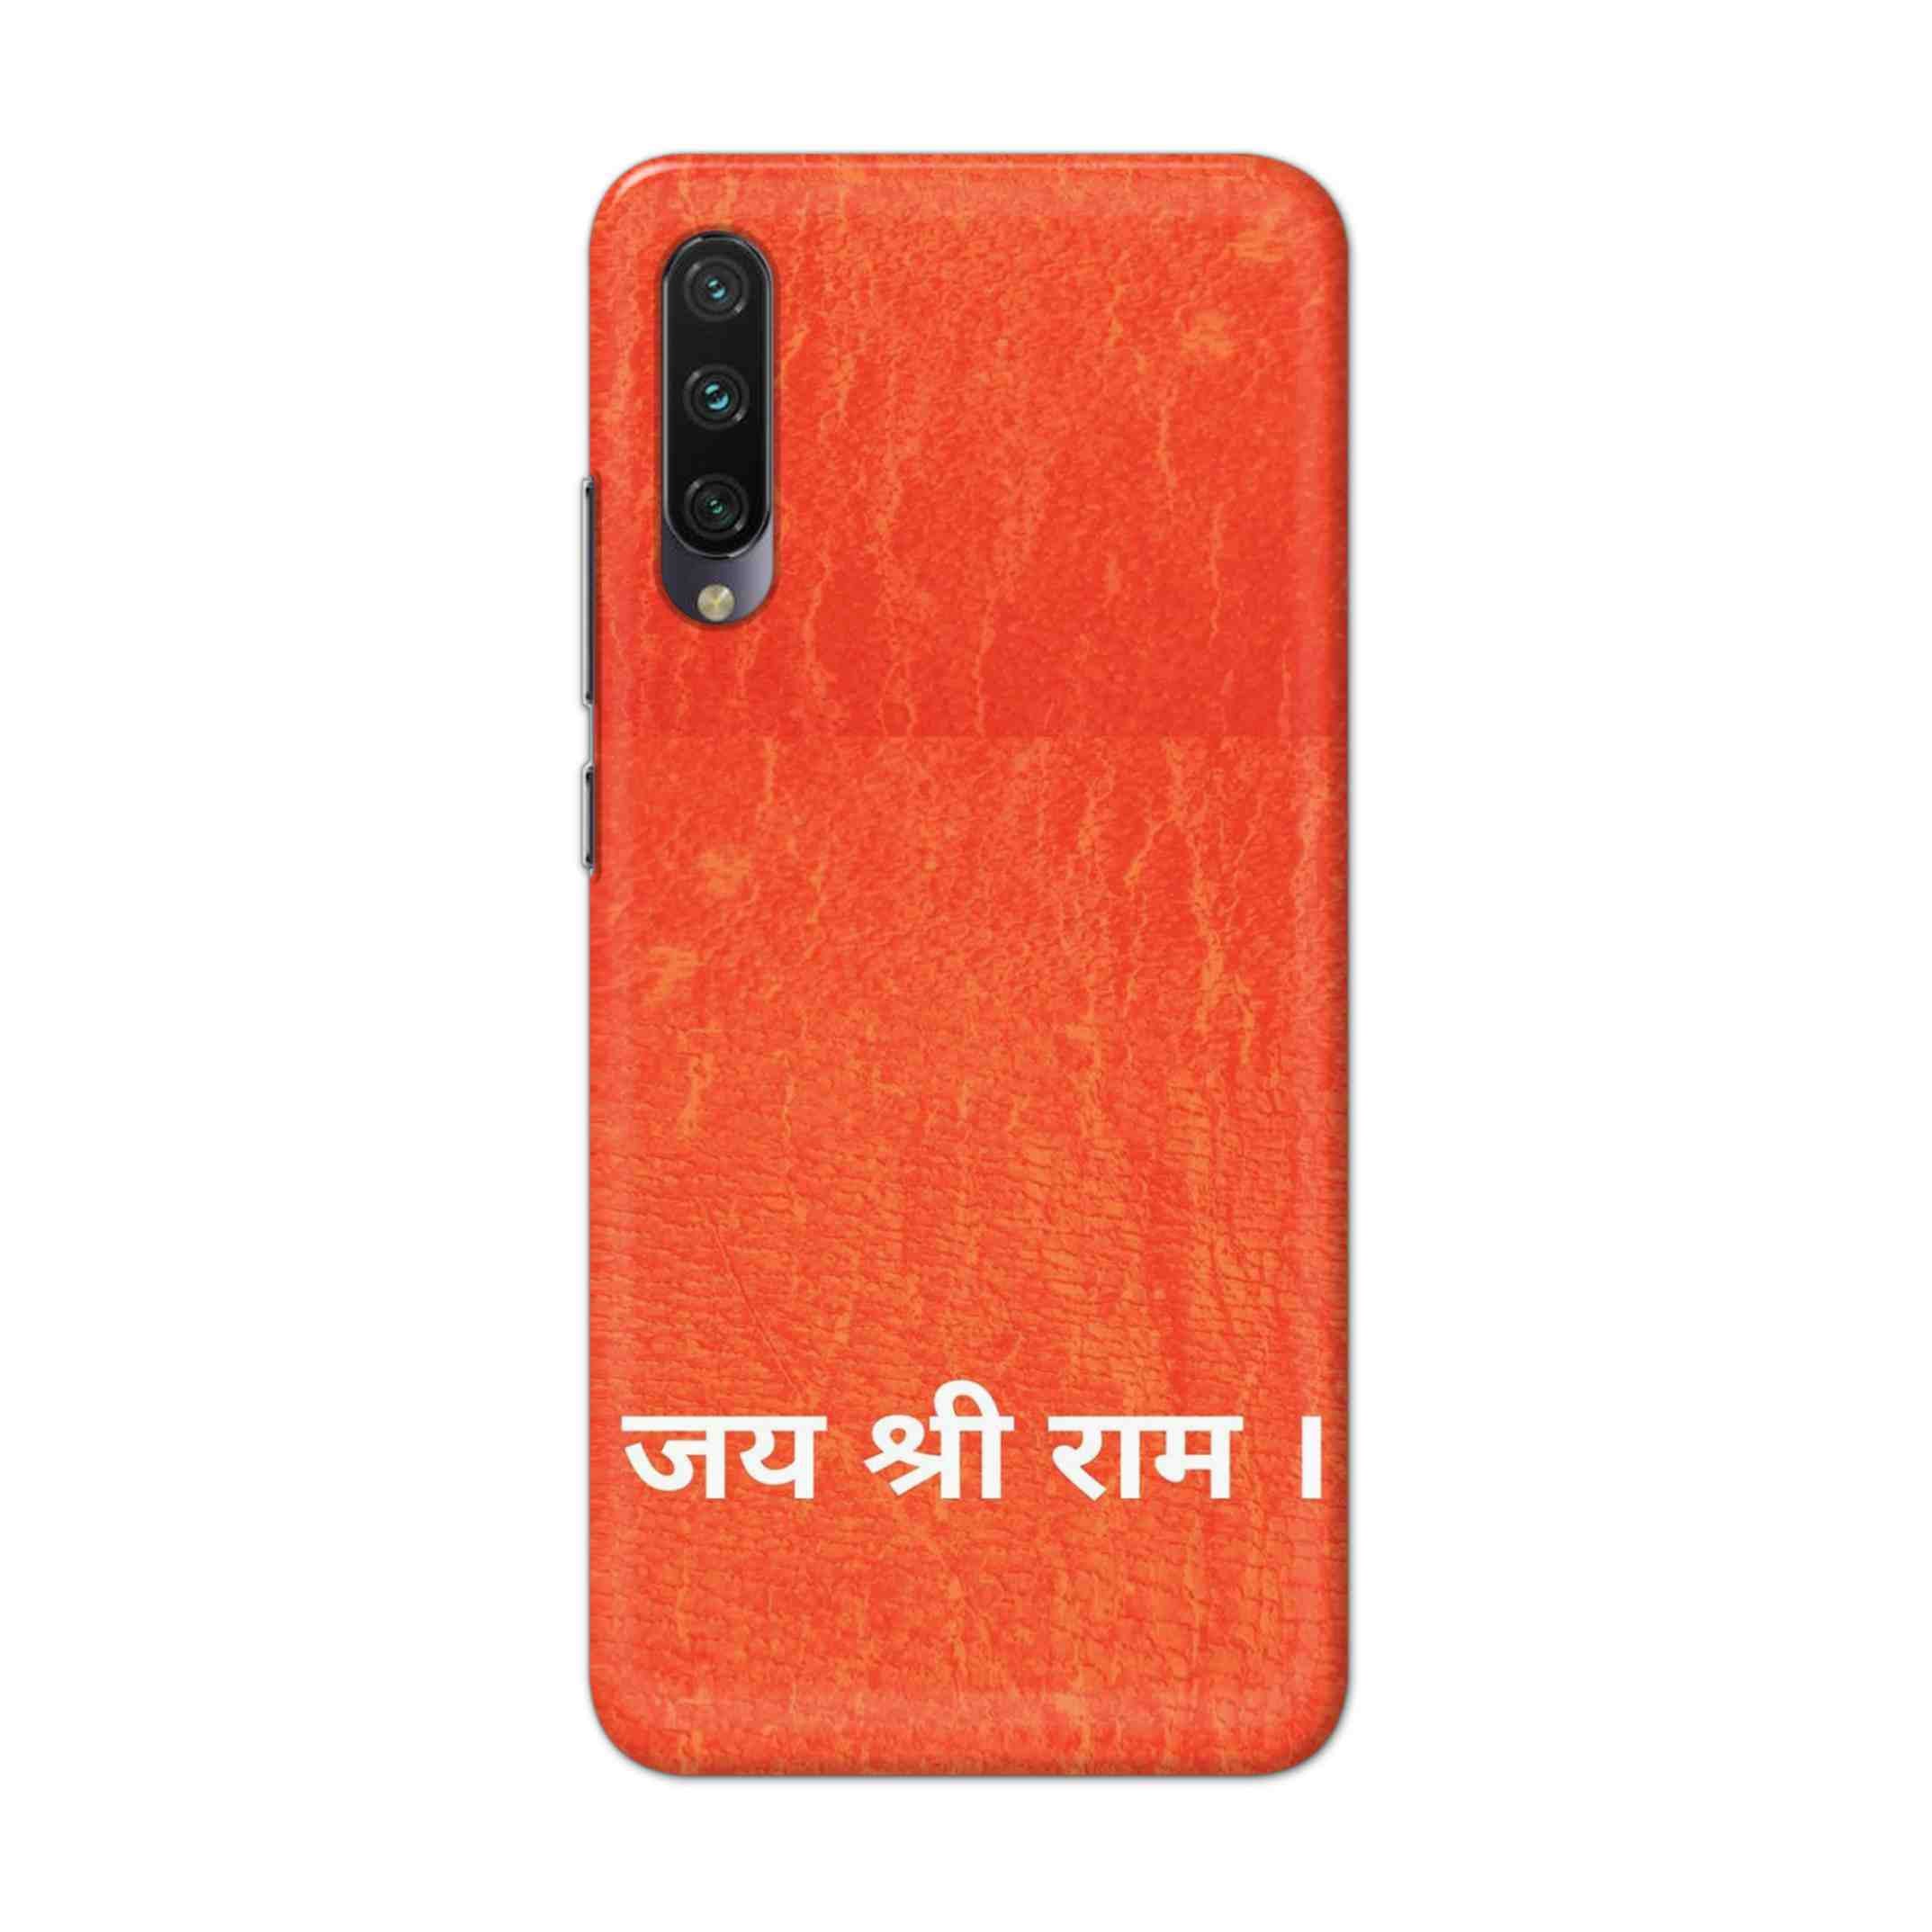 Buy Jai Shree Ram Hard Back Mobile Phone Case Cover For Xiaomi Mi A3 Online